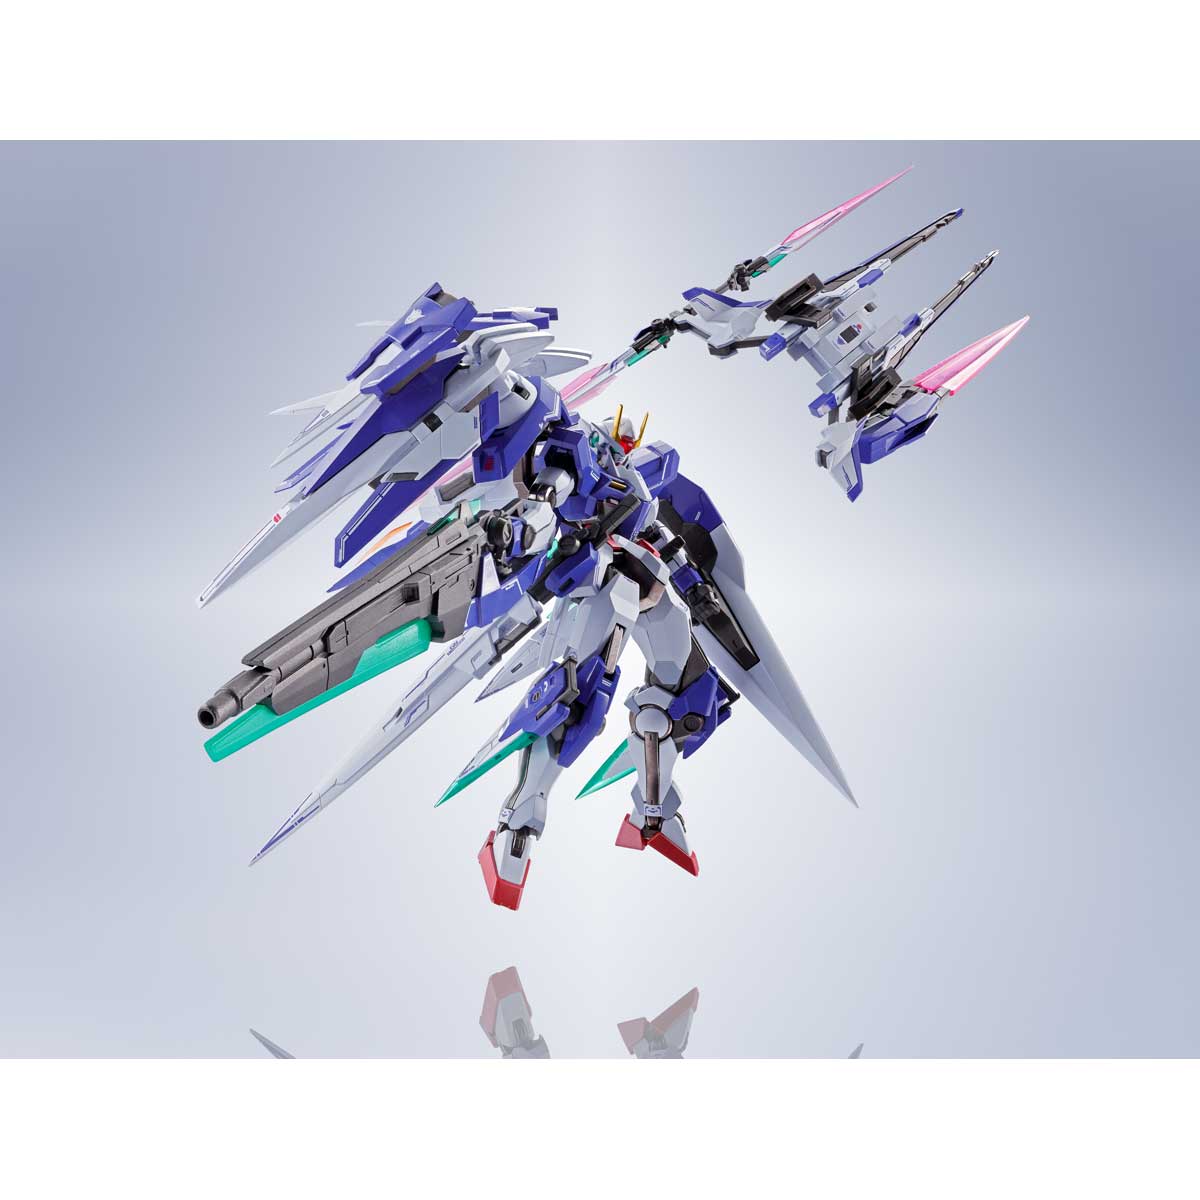 Metal Robot Spirits Side Ms 00 Xnraiser Seven Sword Gn Sword Blaster Set Gundam Premium Bandai Usa Online Store For Action Figures Model Kits Toys And More